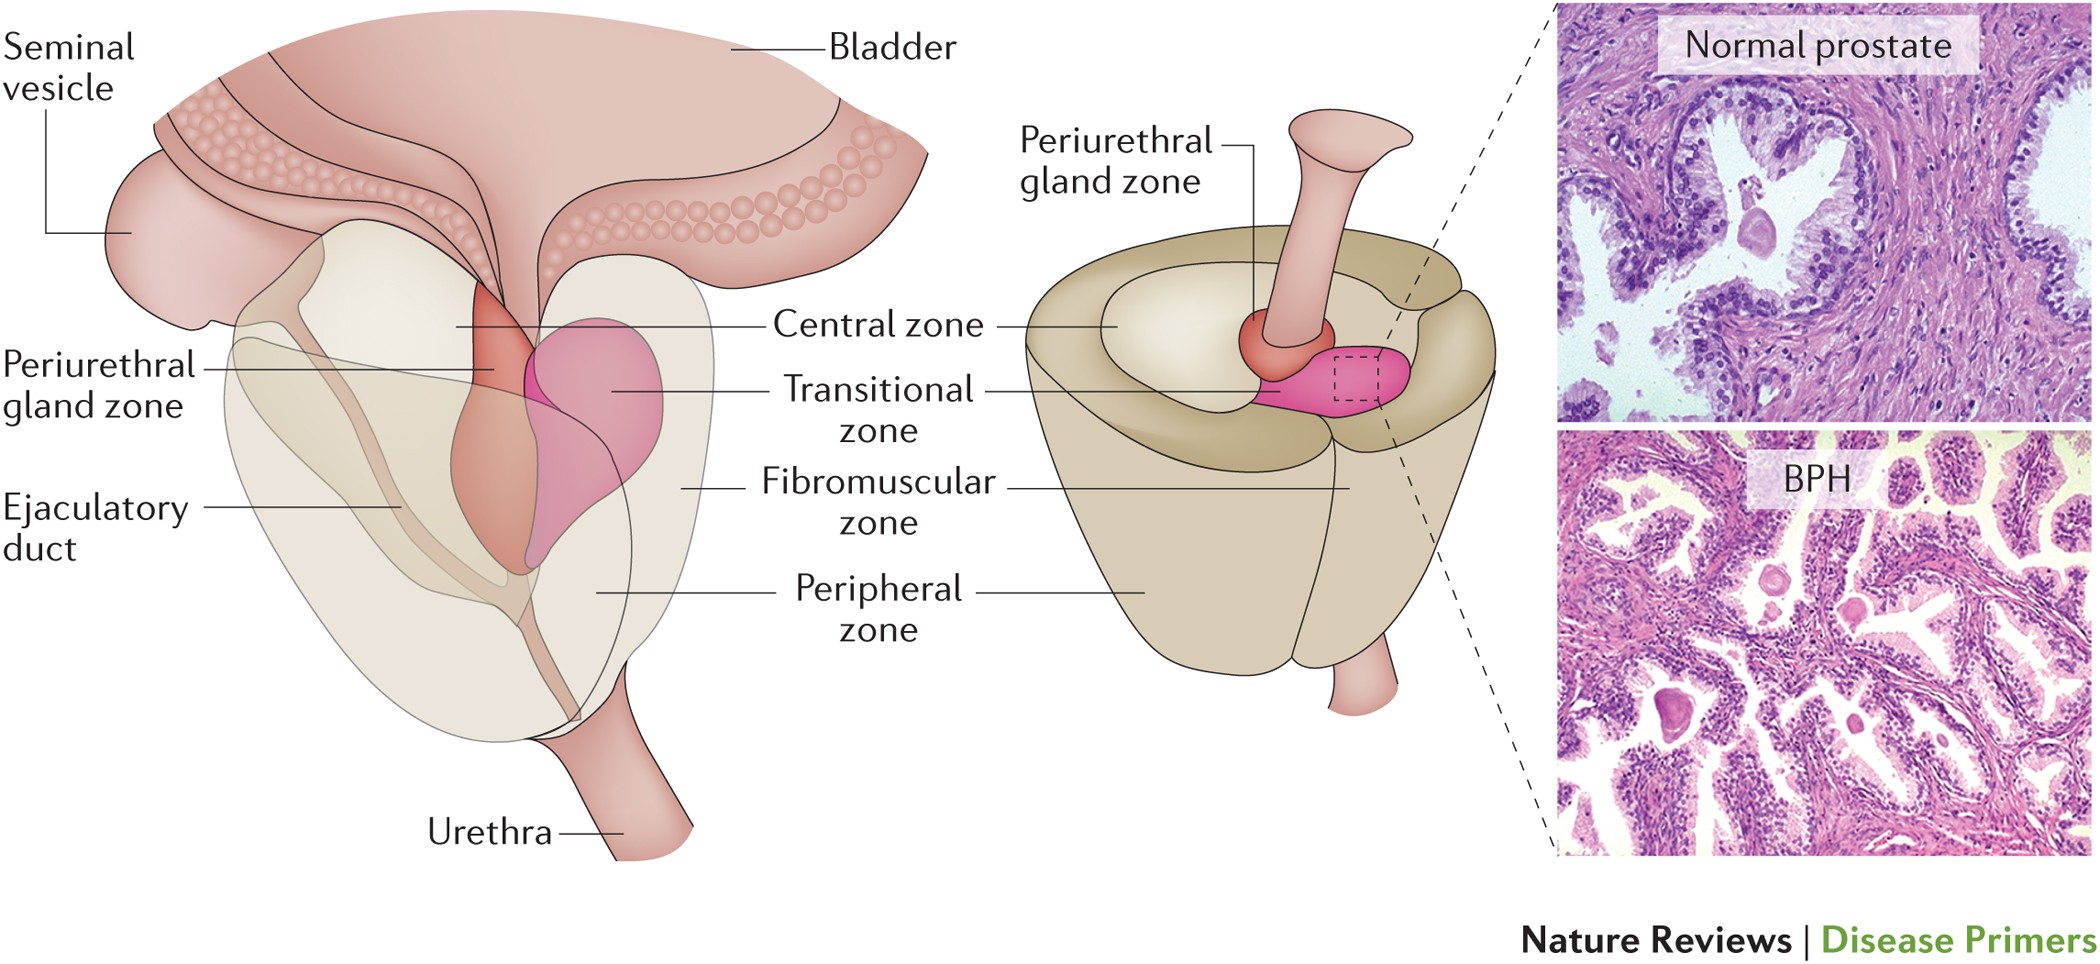 Bph vs prostate cancer presentation